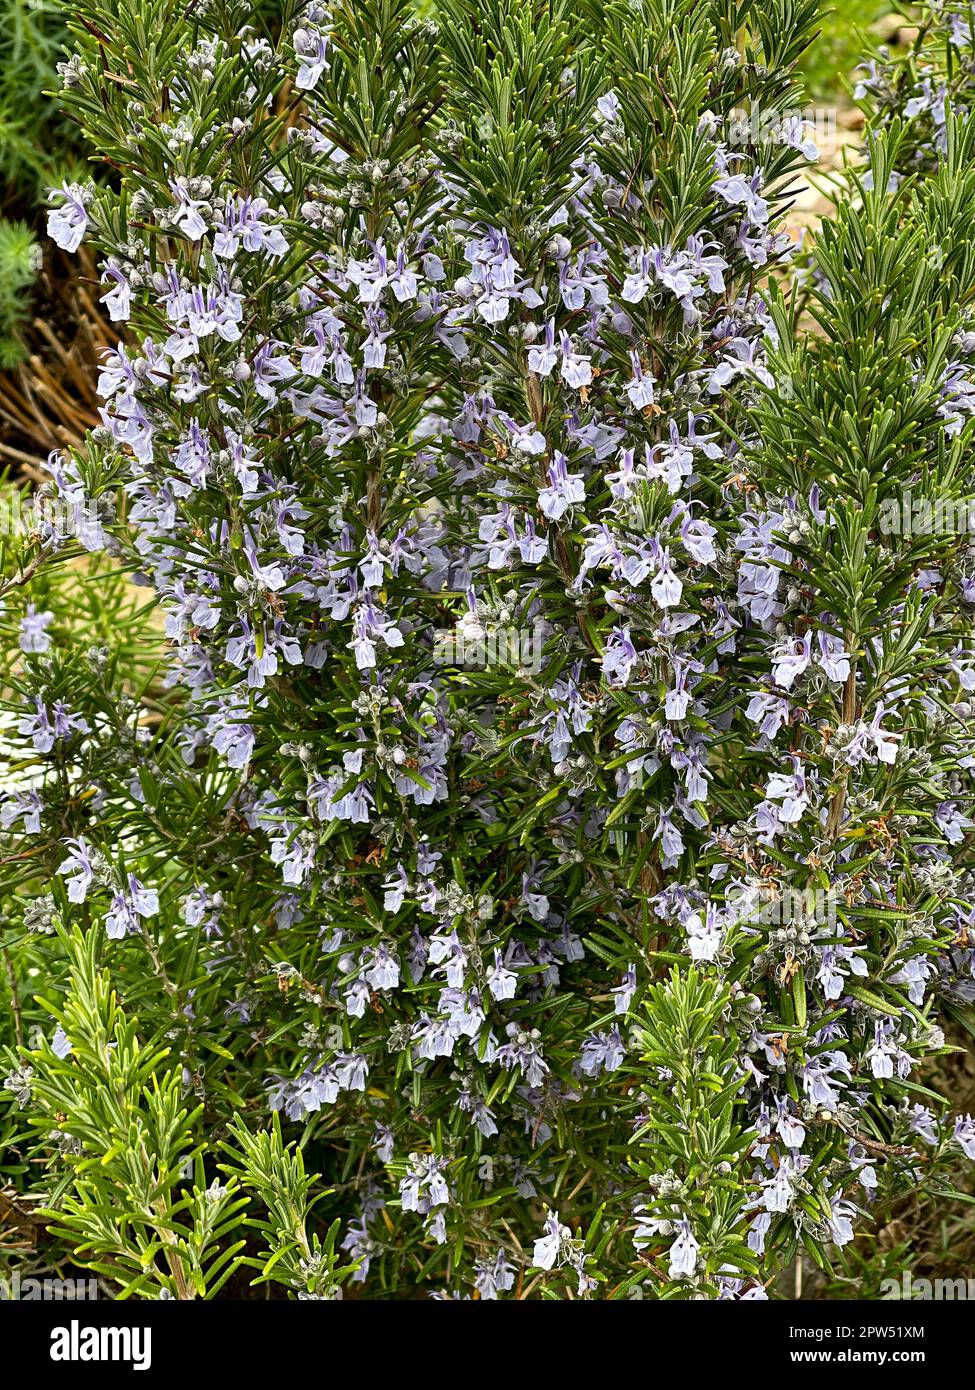 Rosmarin, Romarin officinal, ist eine Heil- und Kraeuterpflanze. Le romarin officinalis, est une plante médicinale et herbacée. Banque D'Images